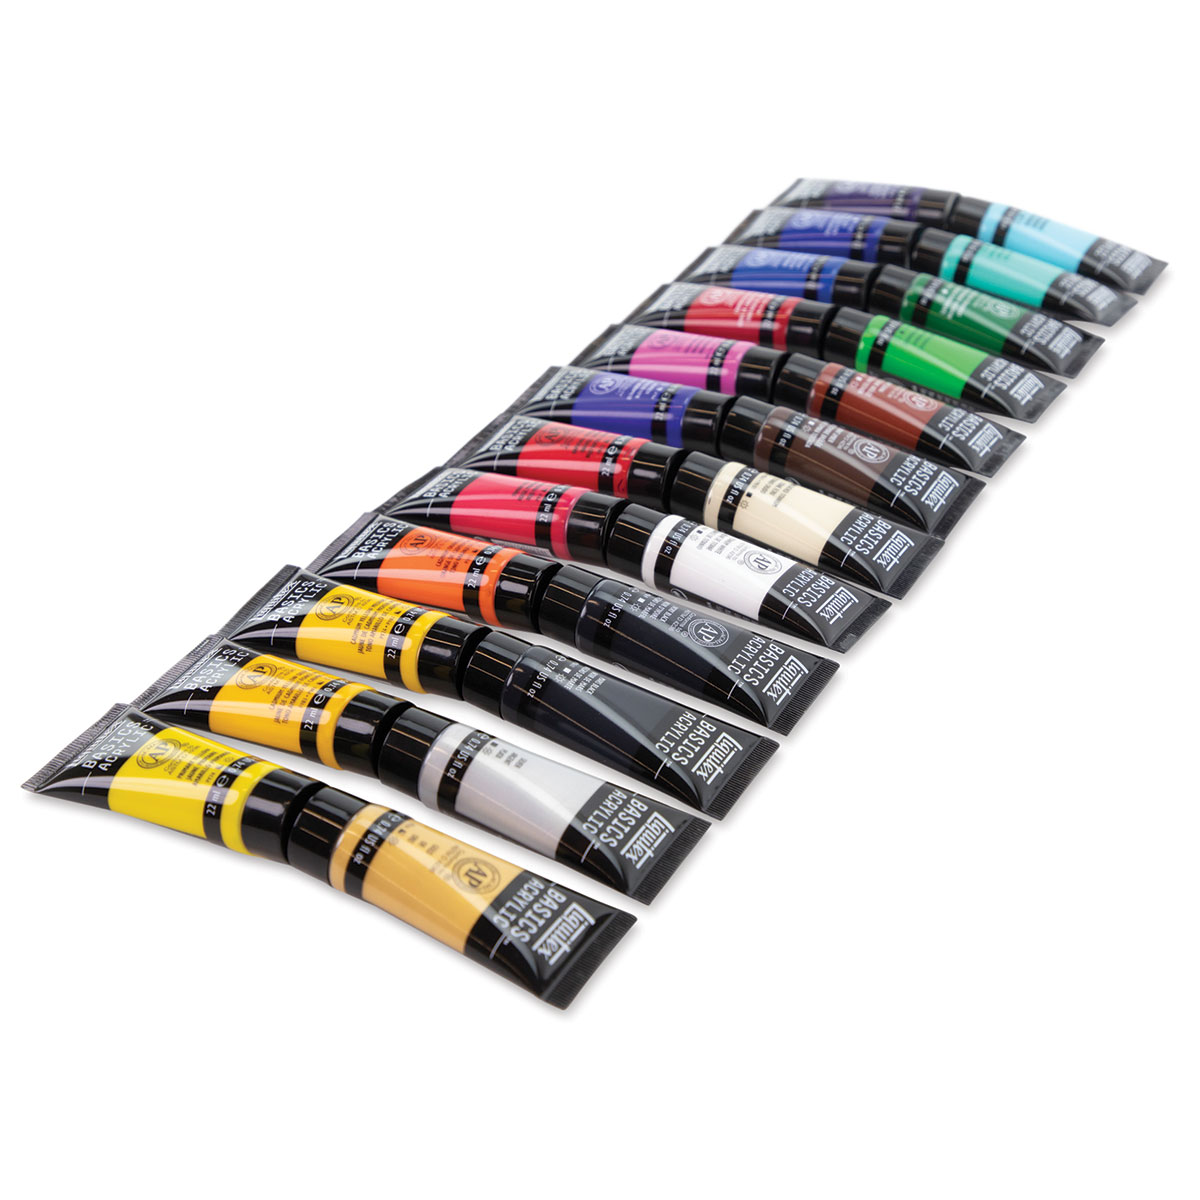 Acrylic paints set Liquitex Basics 72 tubes